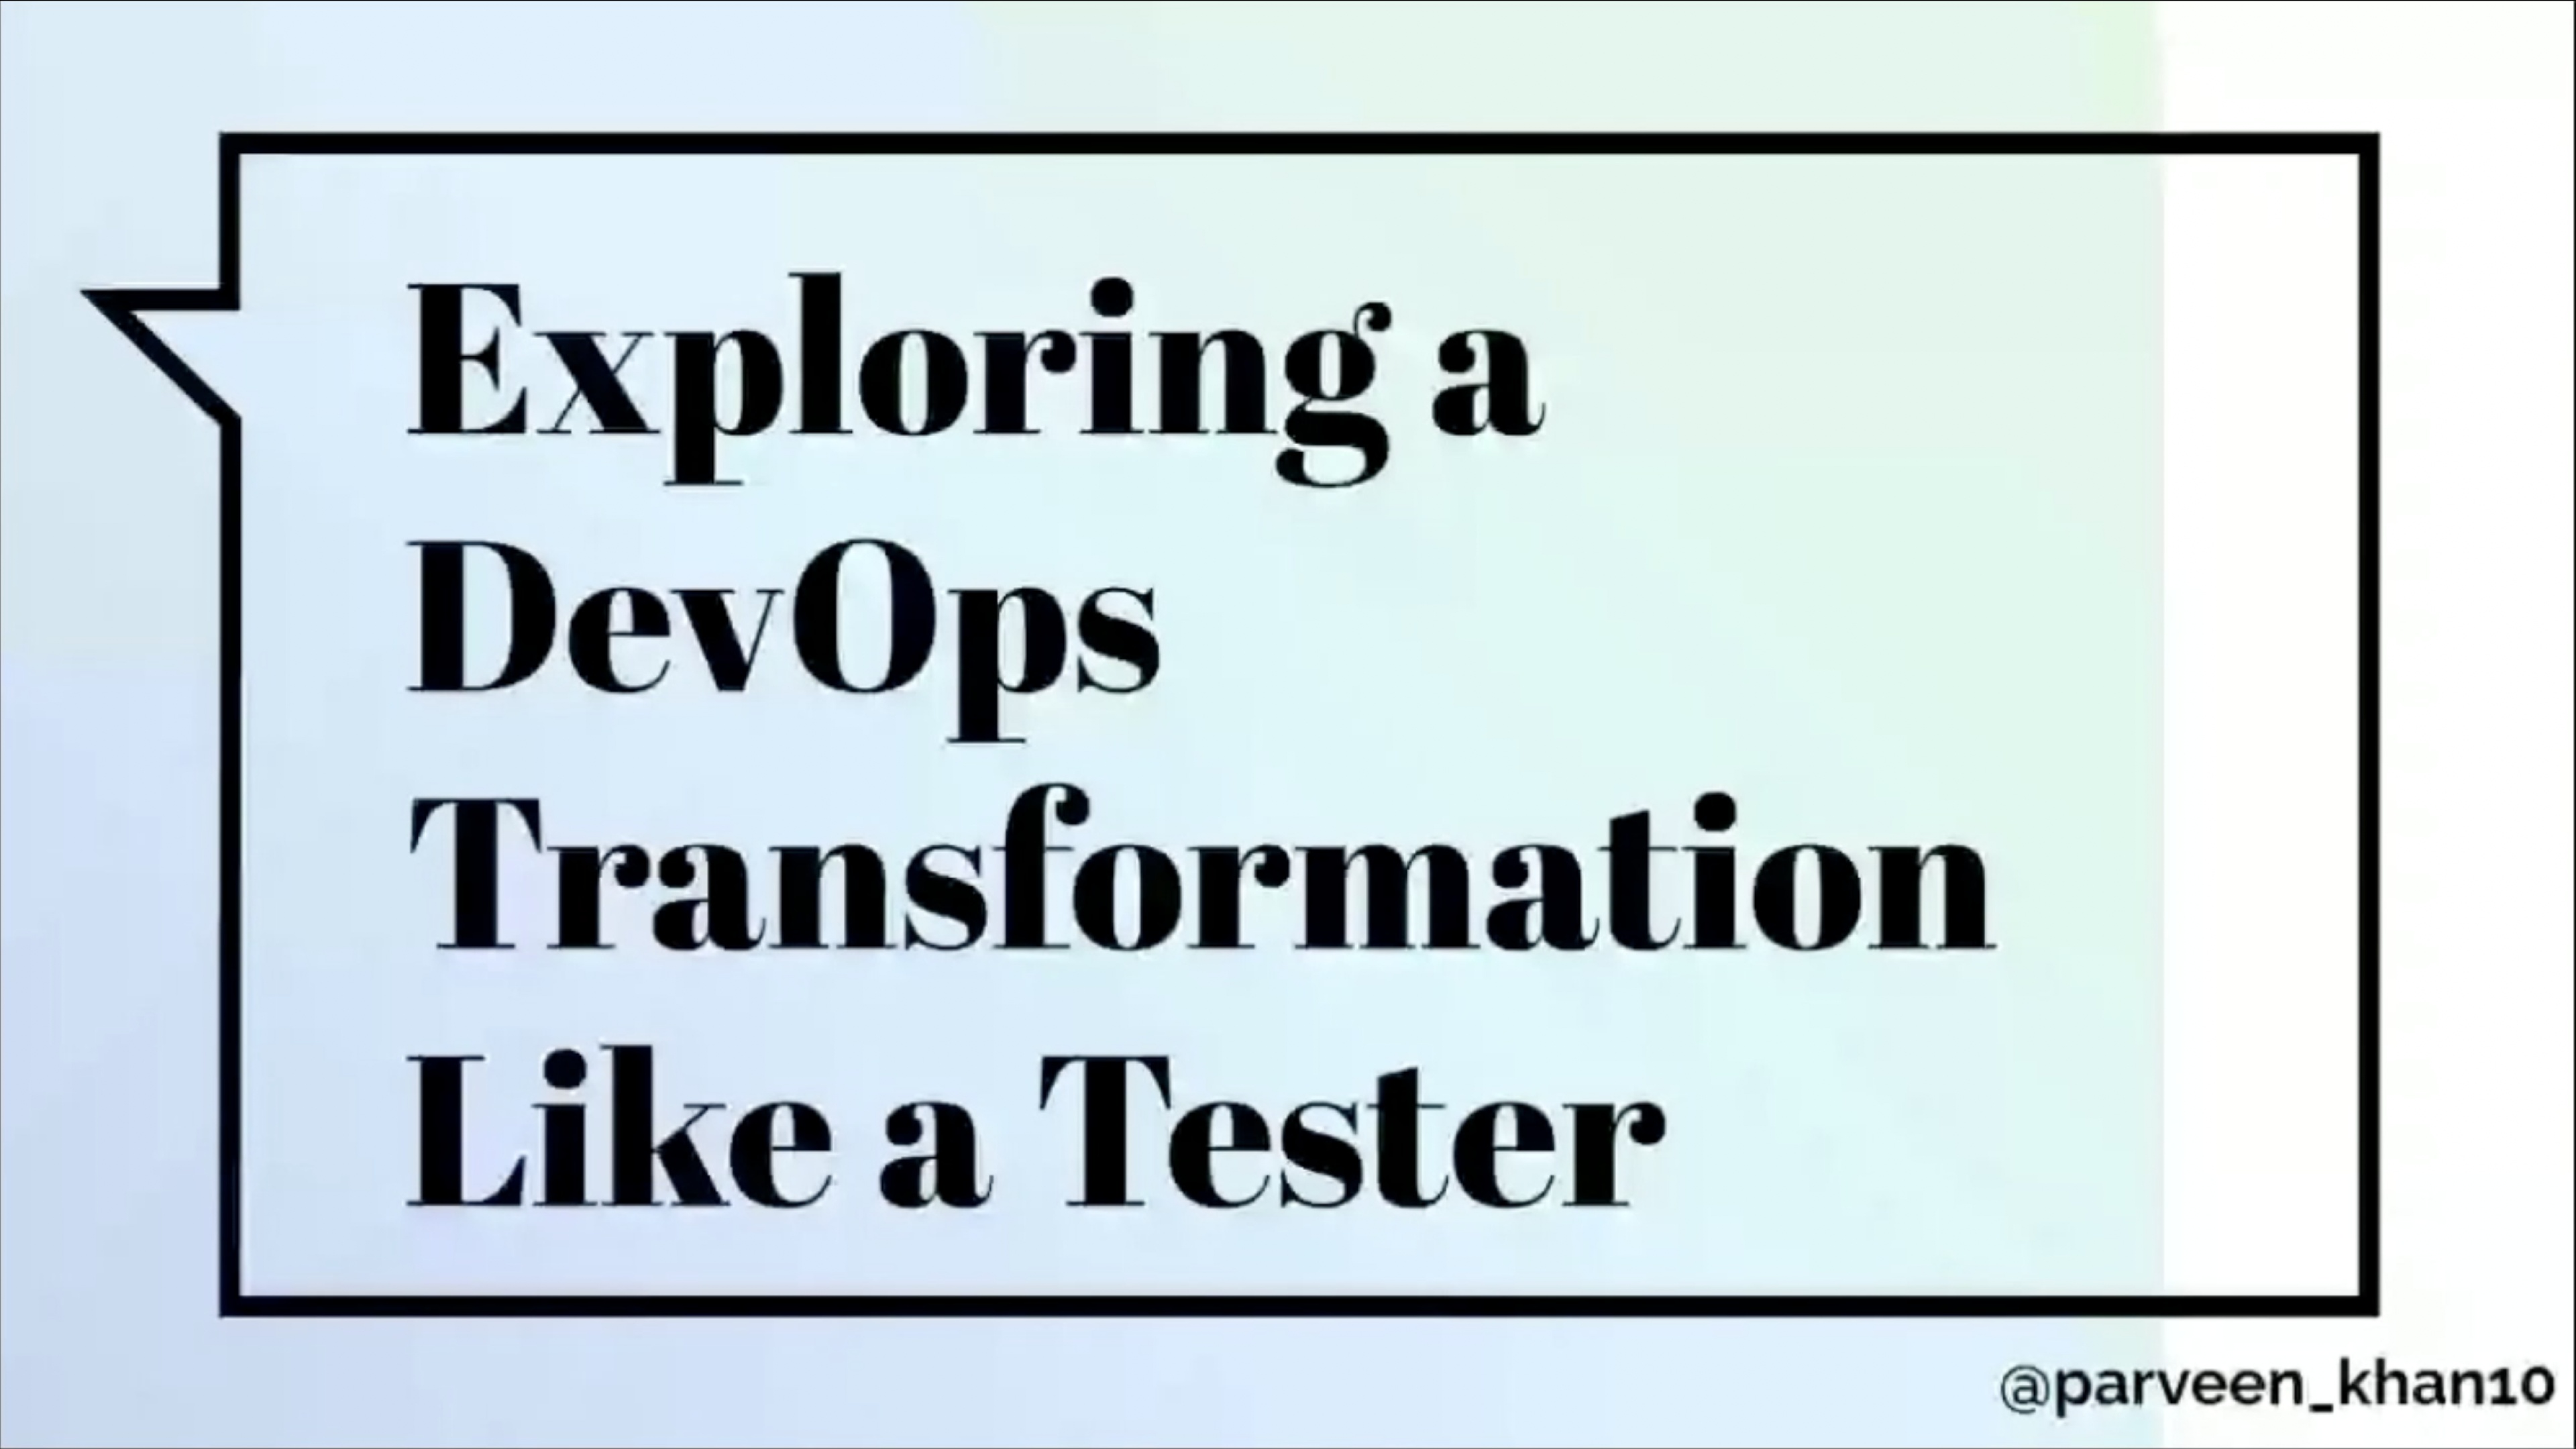 Exploring DevOps Like a Tester by Parveen Khan